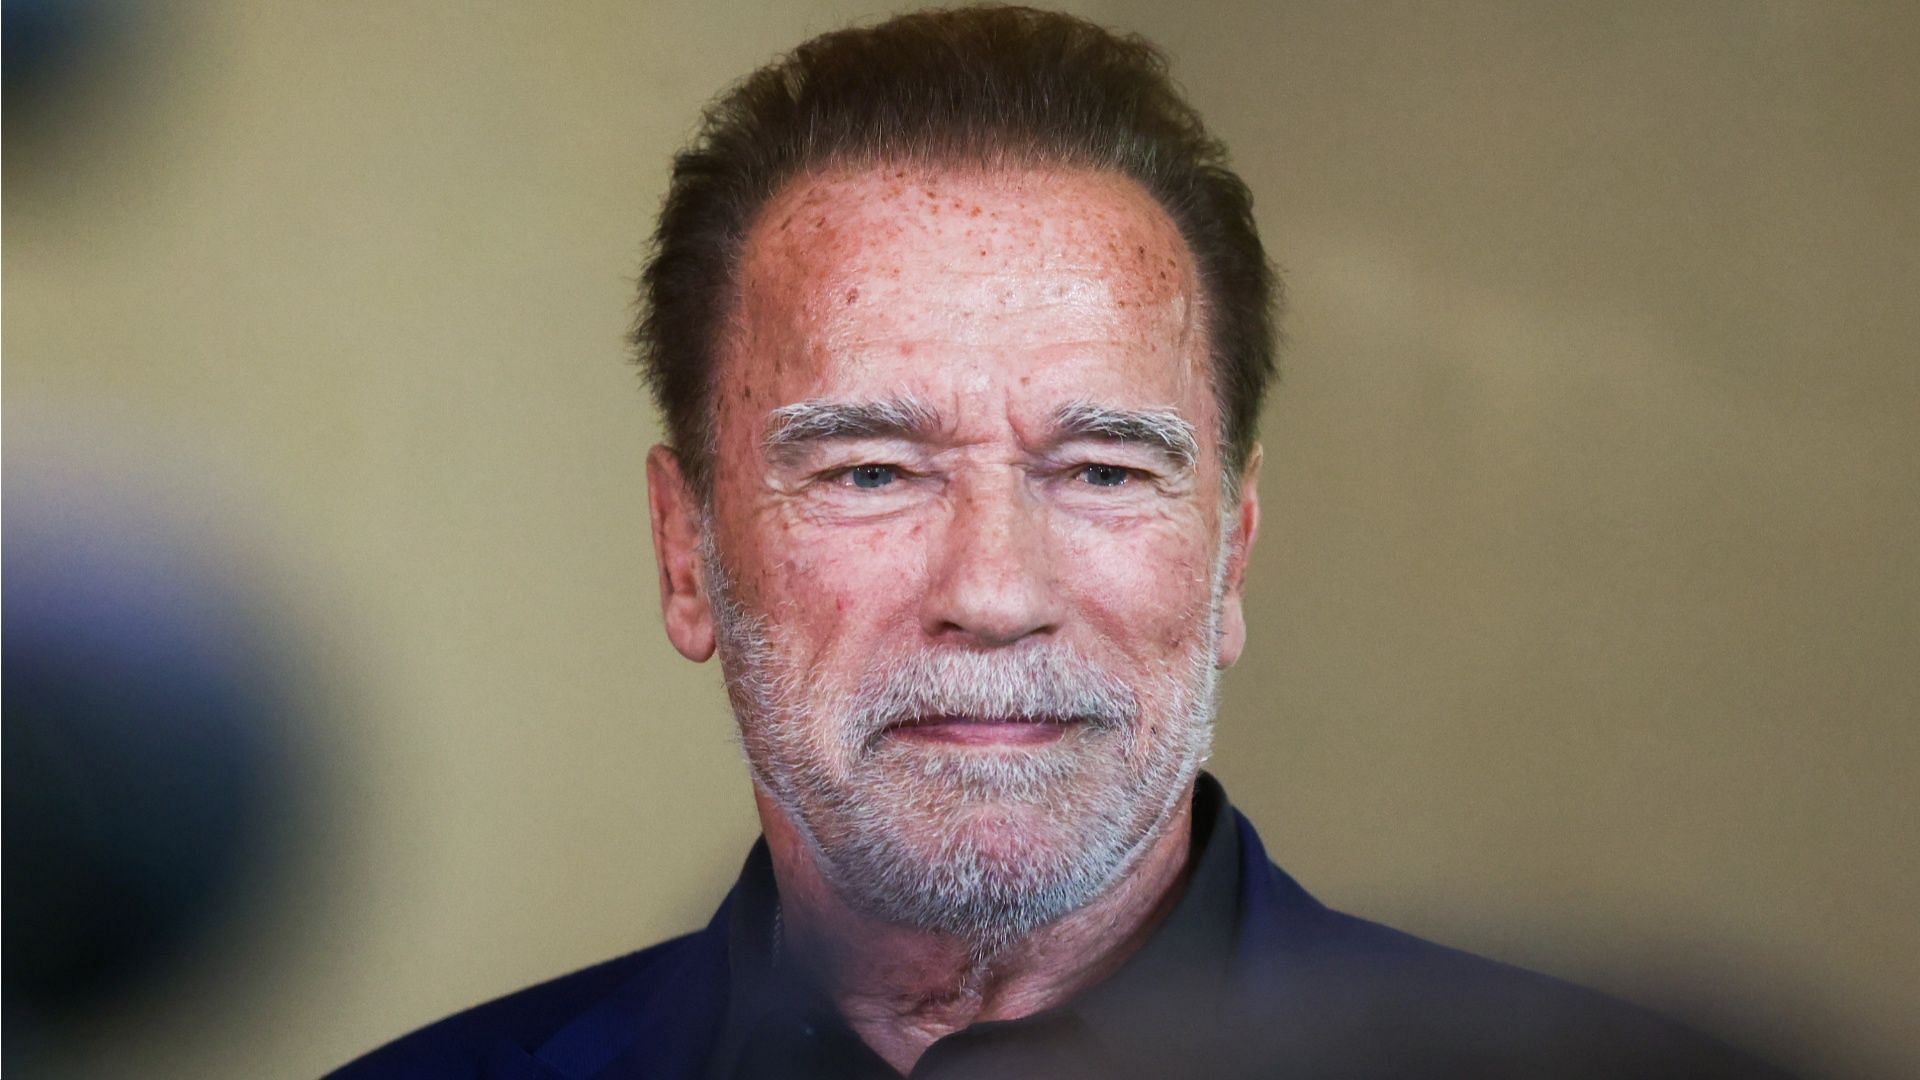  Arnold Schwarzenegger. (Photo via Getty Images)